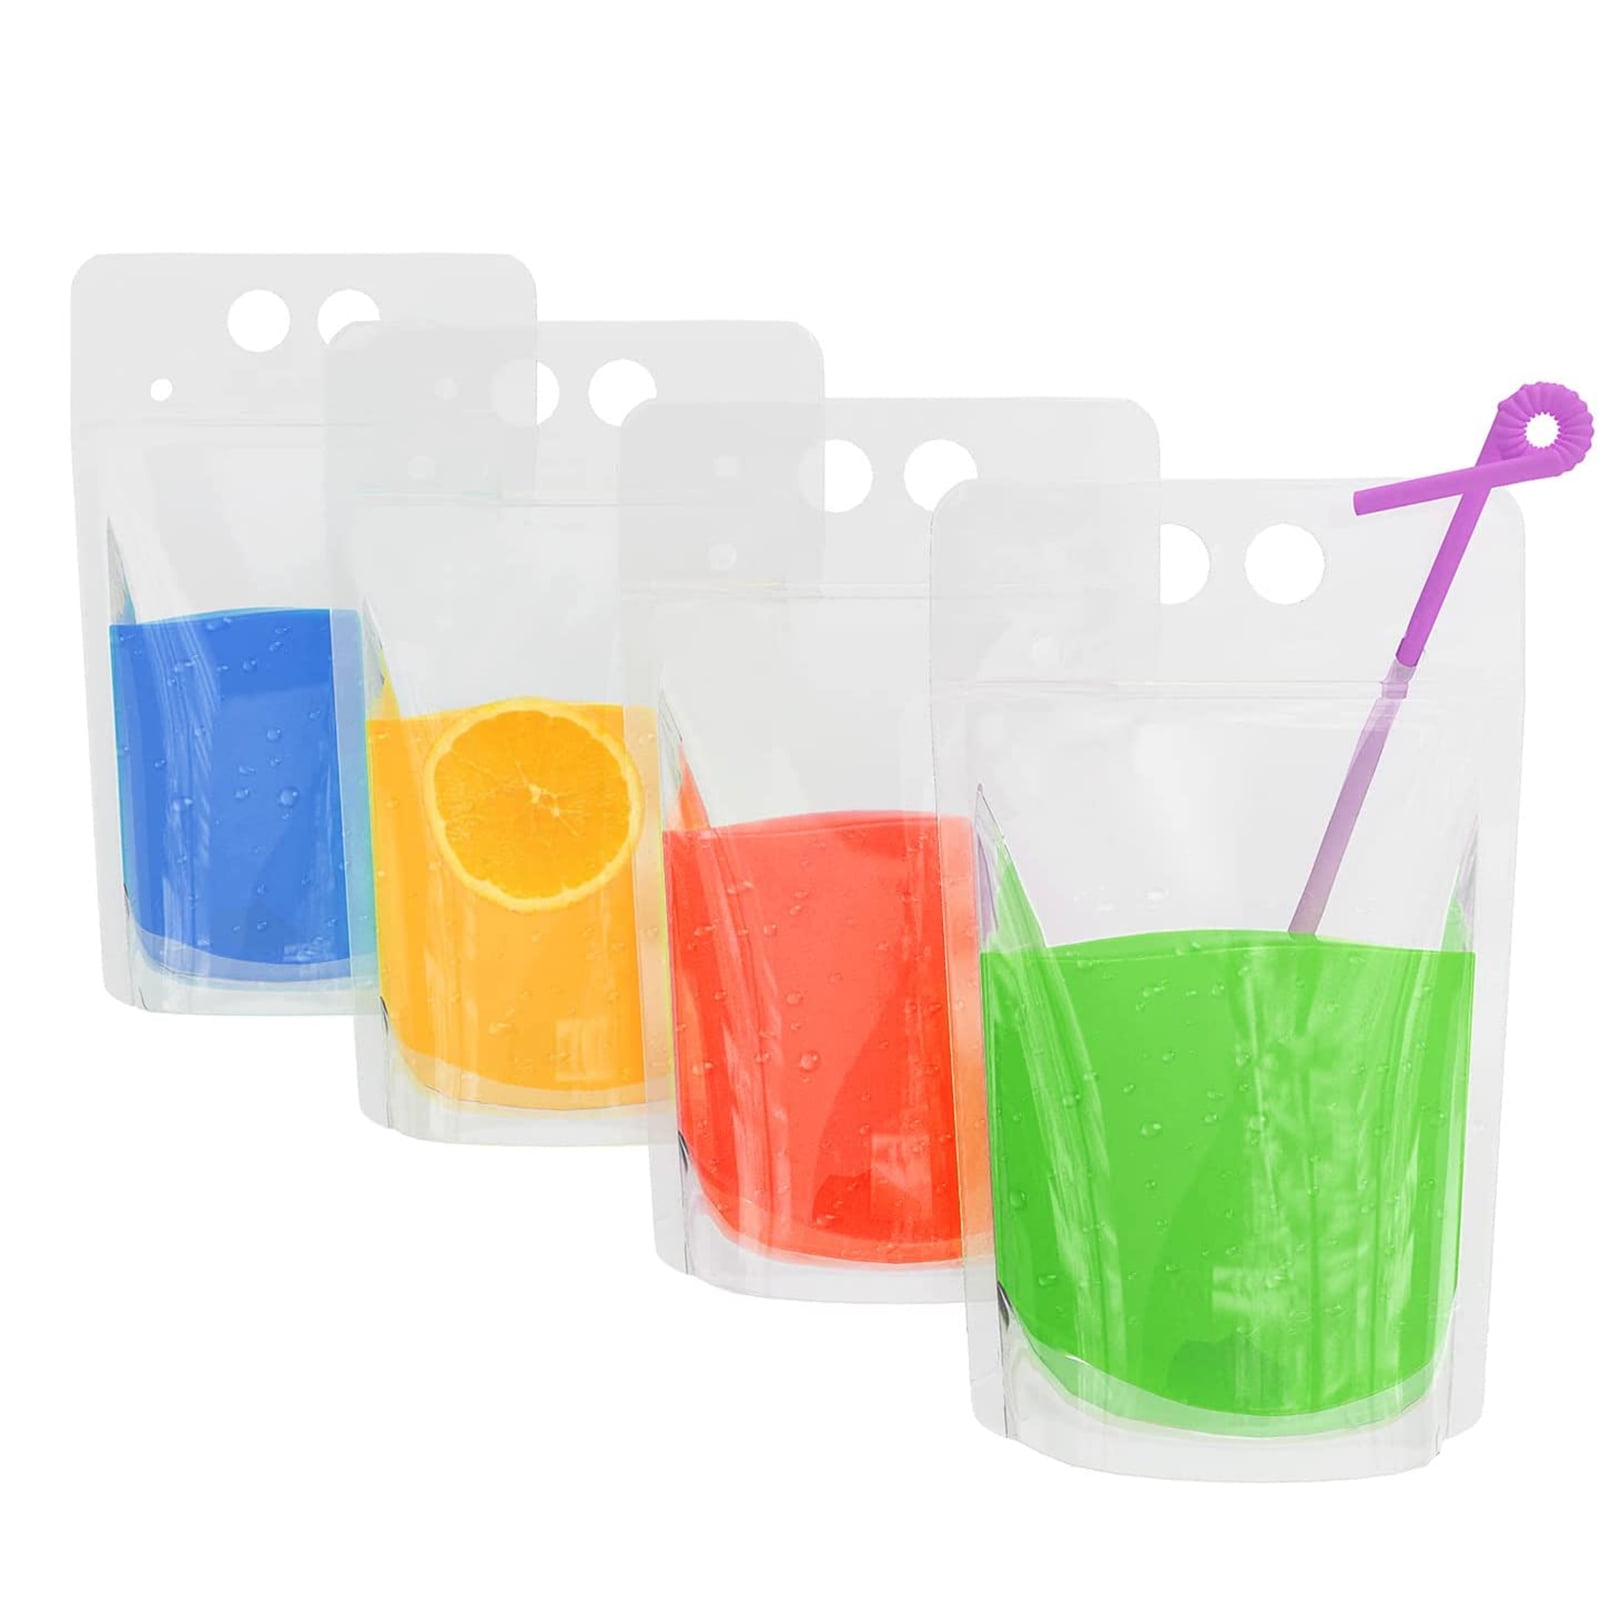 Medca Reusable Drink Pouches - (201 Piece Set) 100 Clear Drink Bags + 100 Straws - Double Zipper Reusable Smoothie Juice, Clear Zipper